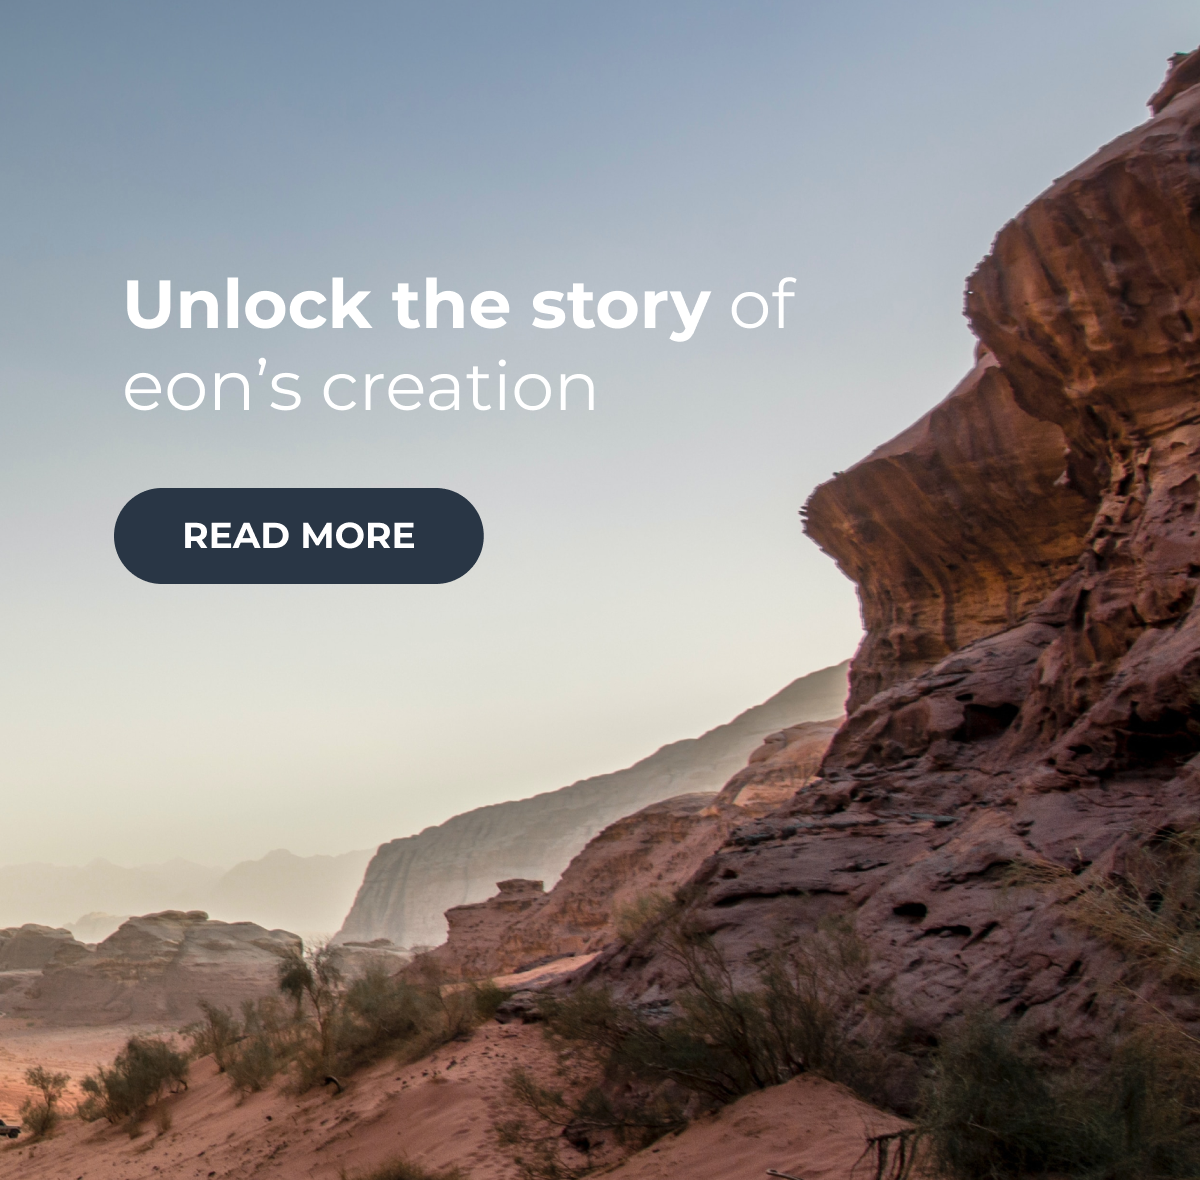 Unlock the story of eon's creation